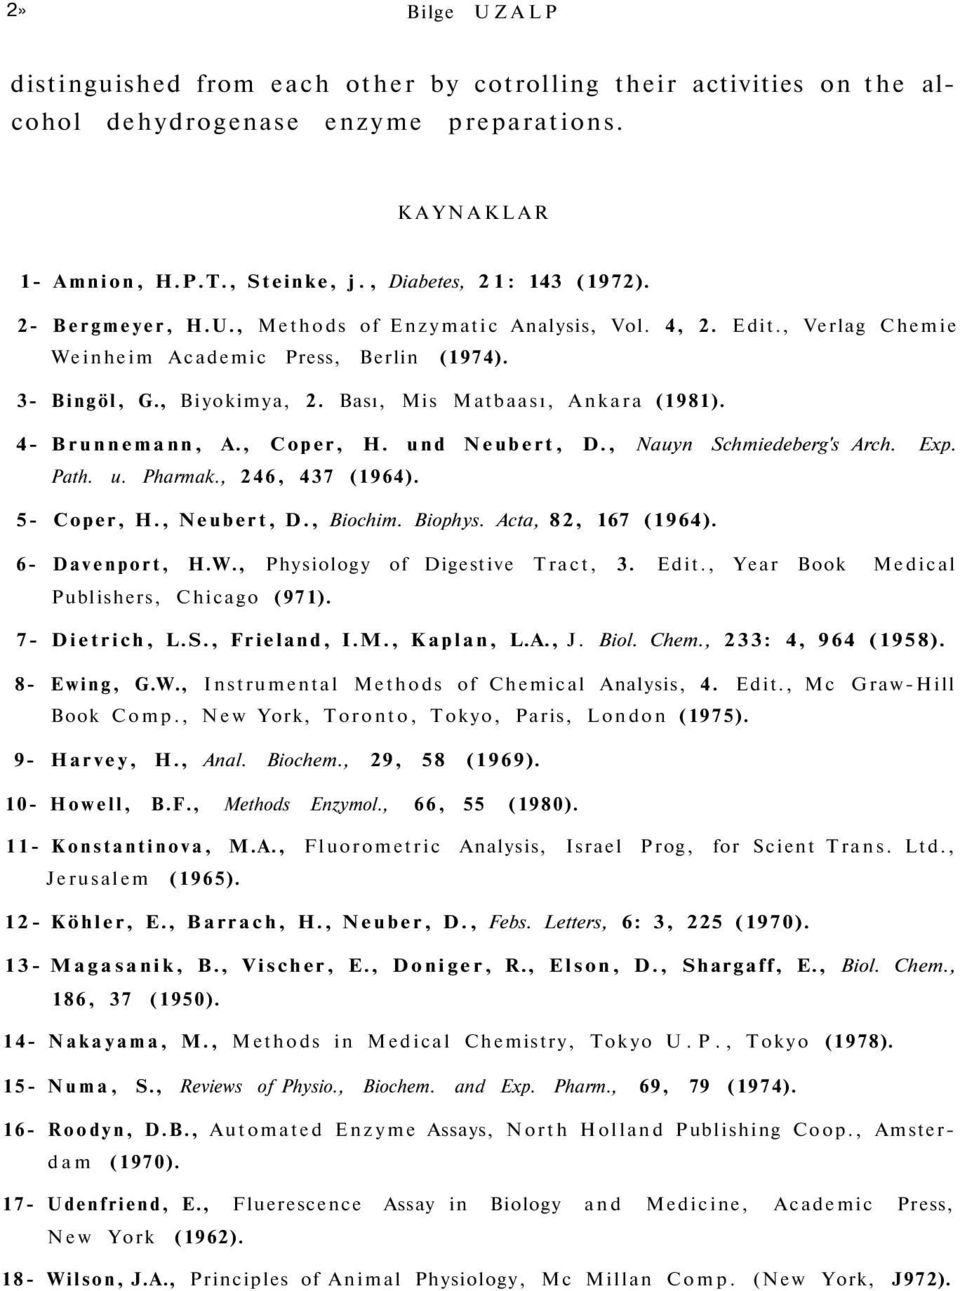 4- Brunnemann, A., Coper, H. und Neubert, D., Nauyn Schmiedeberg's Arch. Exp. Path. u. Pharmak., 246, 437 (1964). 5- Coper, H., Neubert, D., Biochim. Biophys. Acta, 82, 167 (1964). 6- Davenport, H.W.